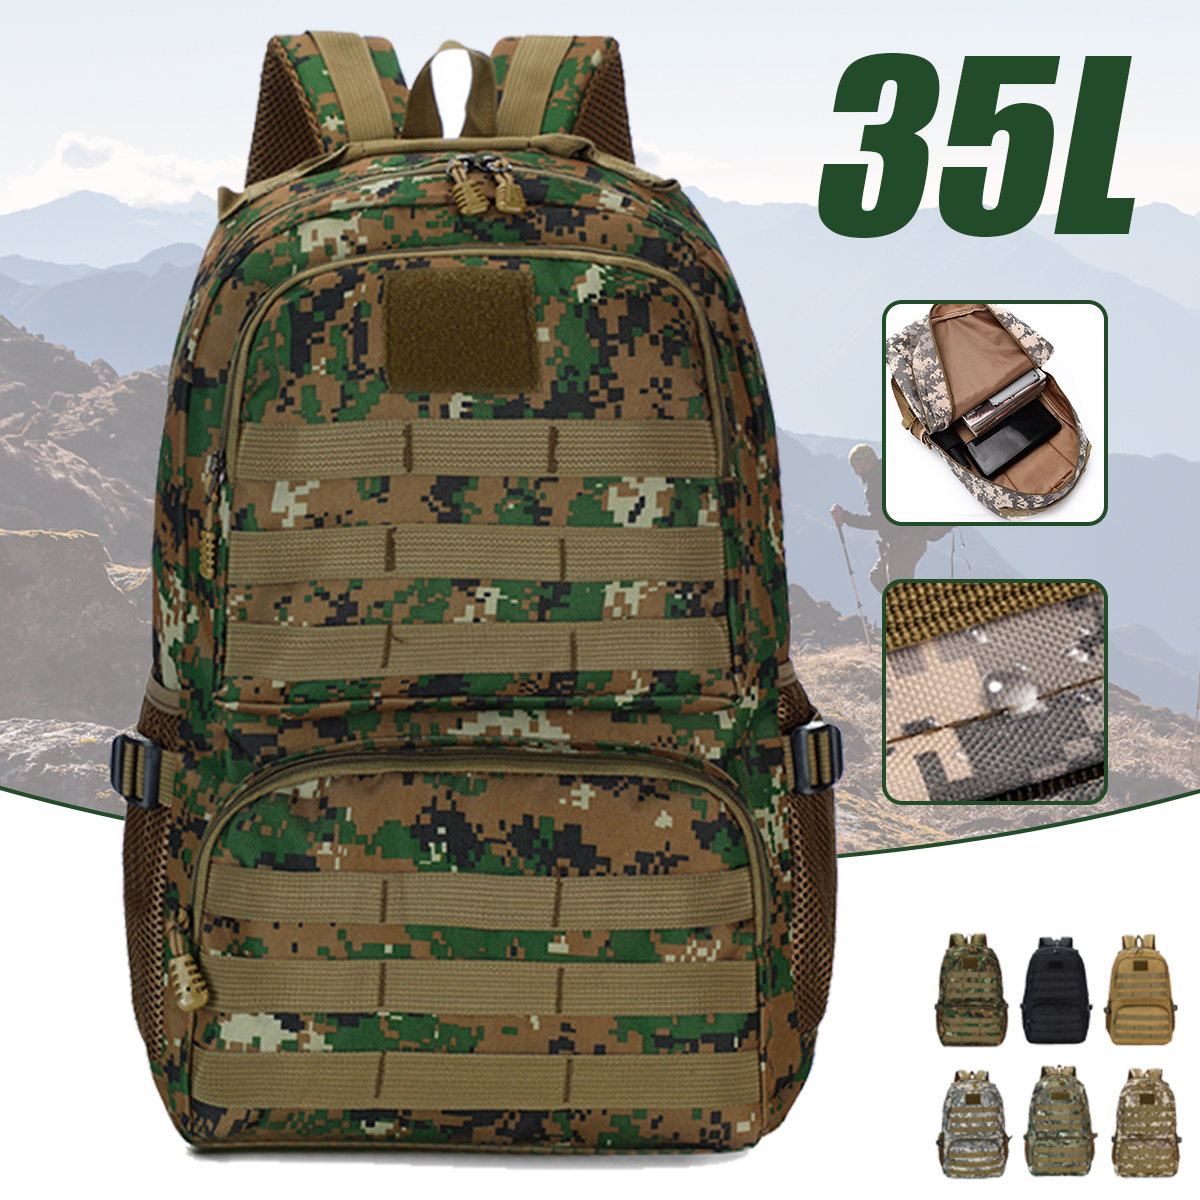 35L-Climbing-Backpack-Waterproof-Large-Rucksack-Sport-Travel-Camping-Hiking-Crossbody-Shoulder-Bag-1855392-1